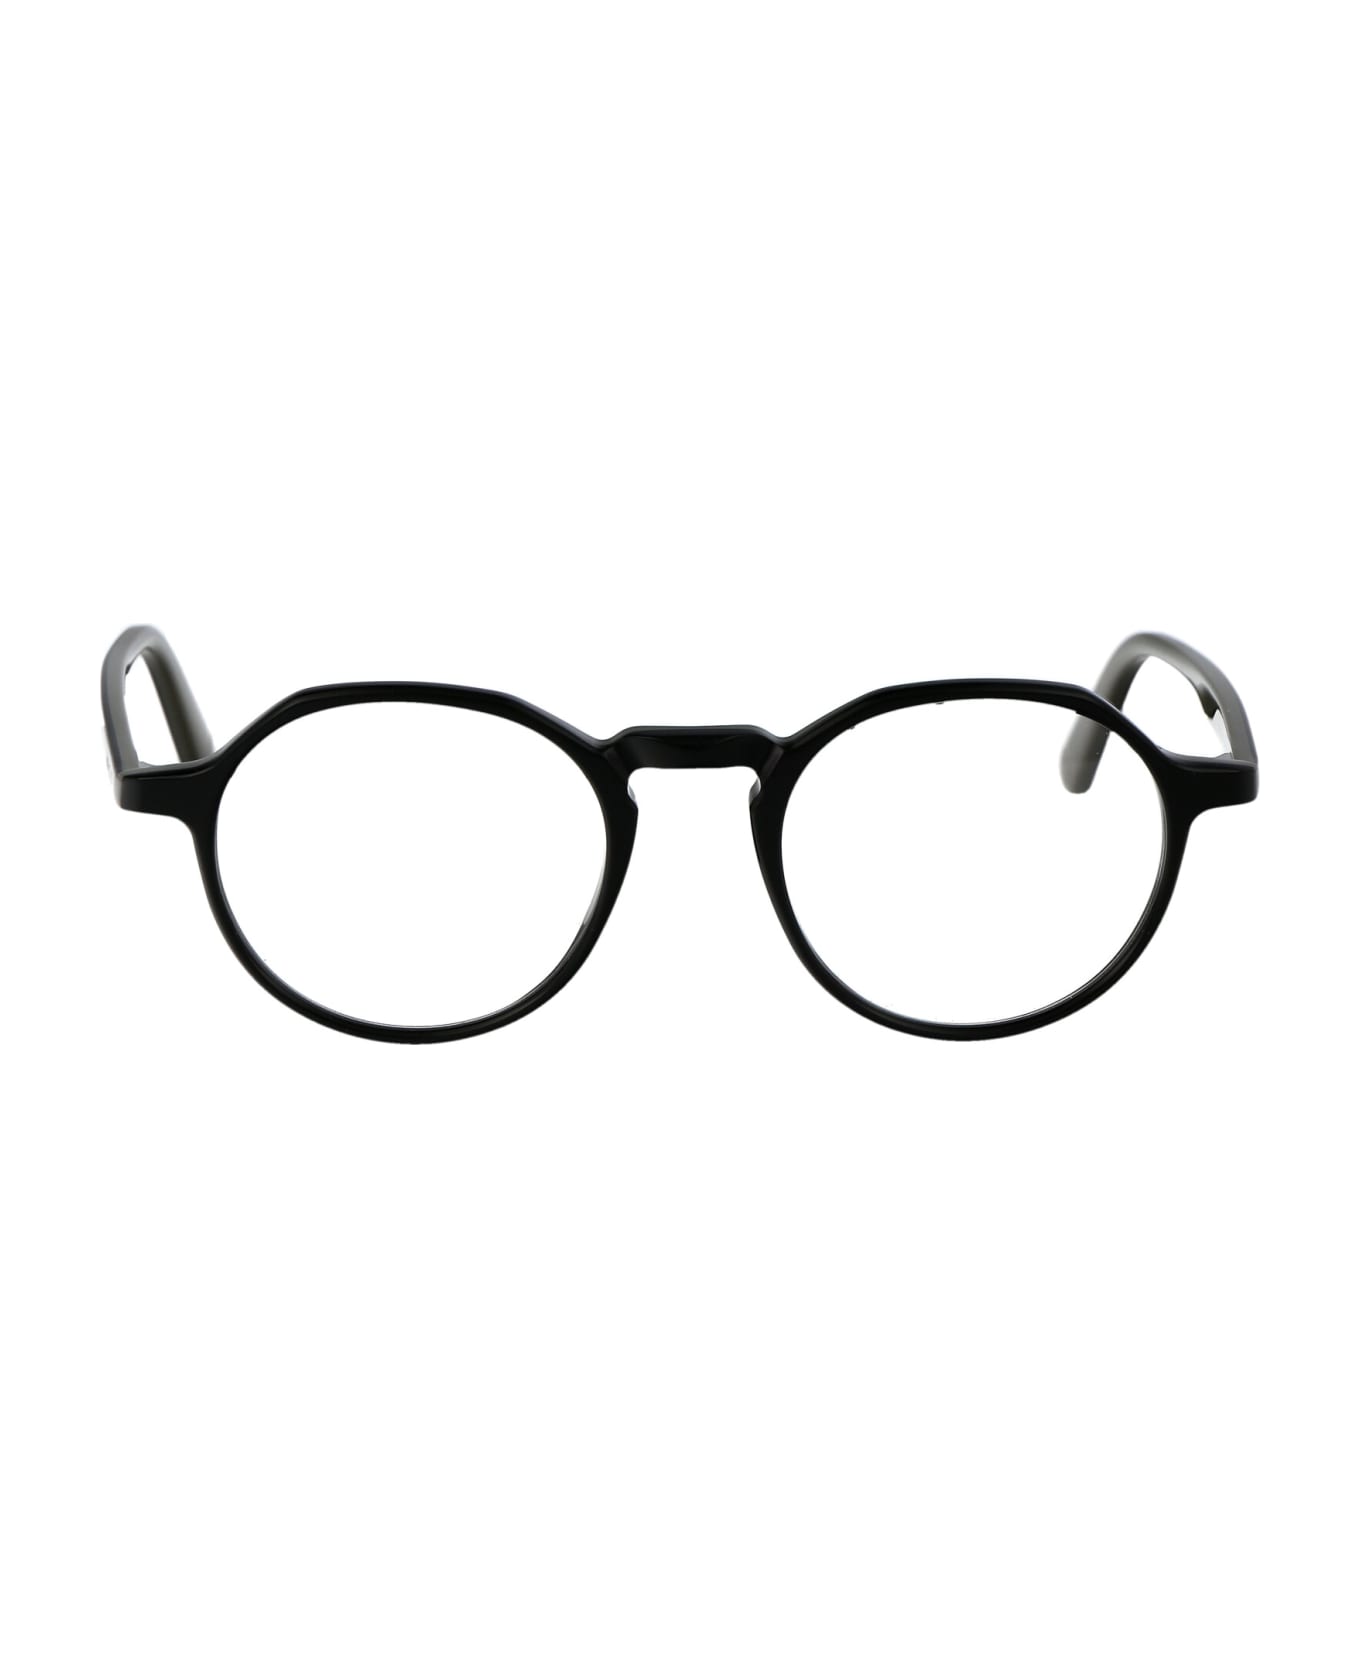 Moncler Eyewear Ml5120 Glasses - 005 Nero/Monocolore